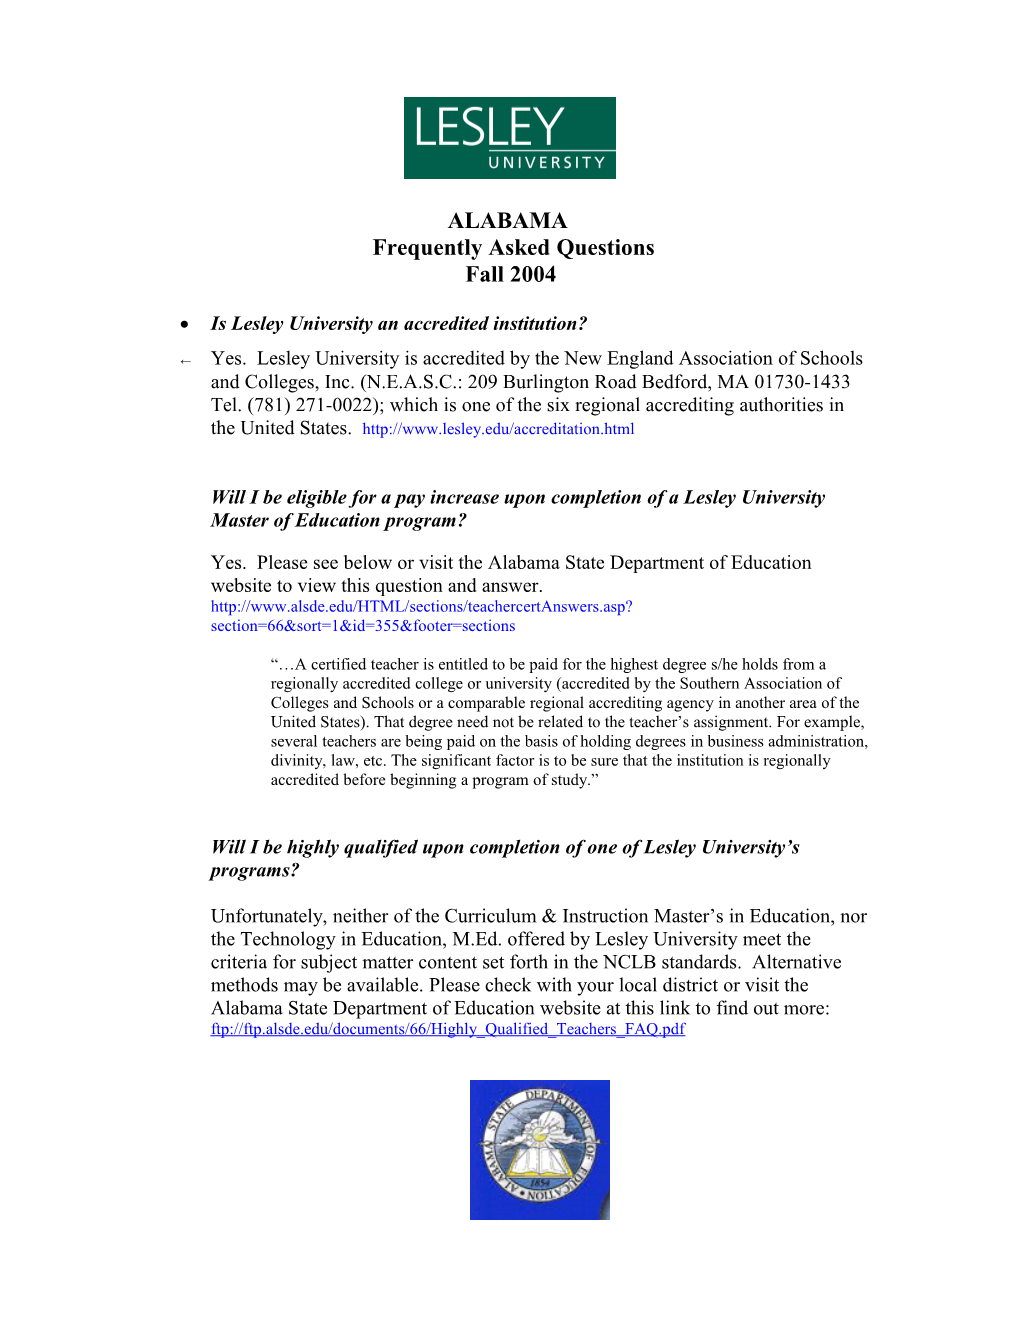 Lesley University in Alabama FAQ Sheet